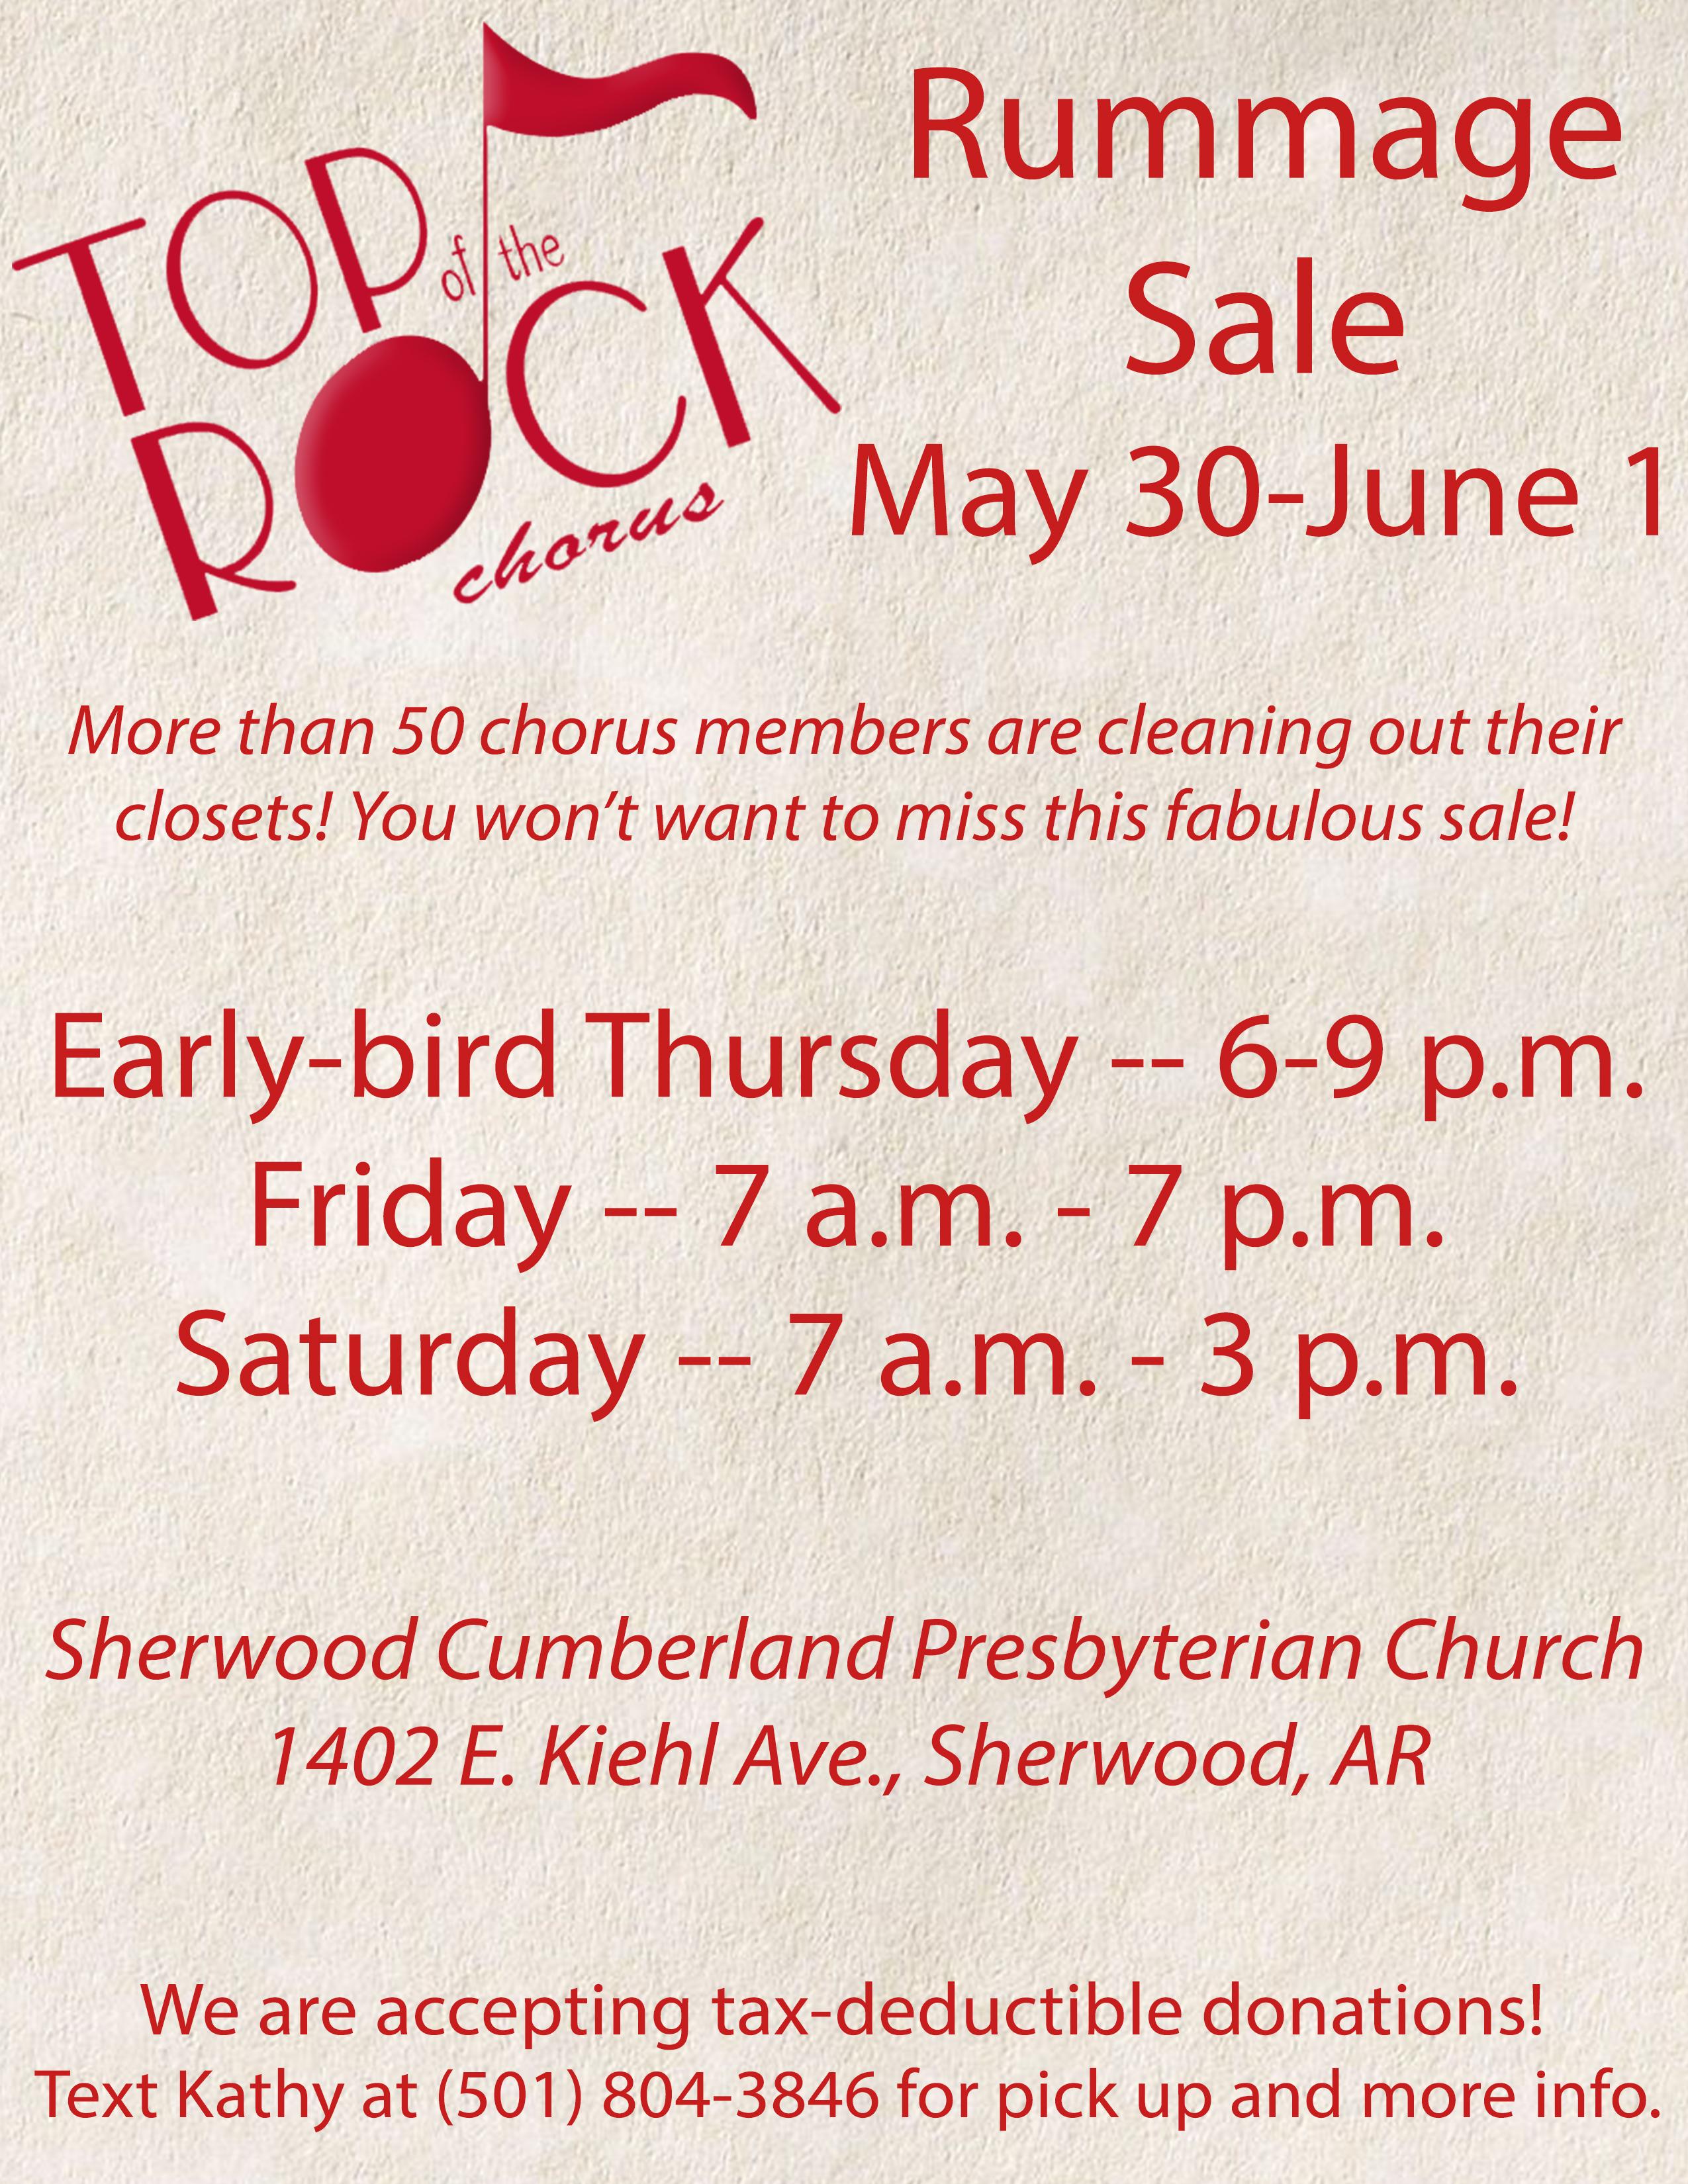 Top of the Rock Rummage Sale May 30-June 1